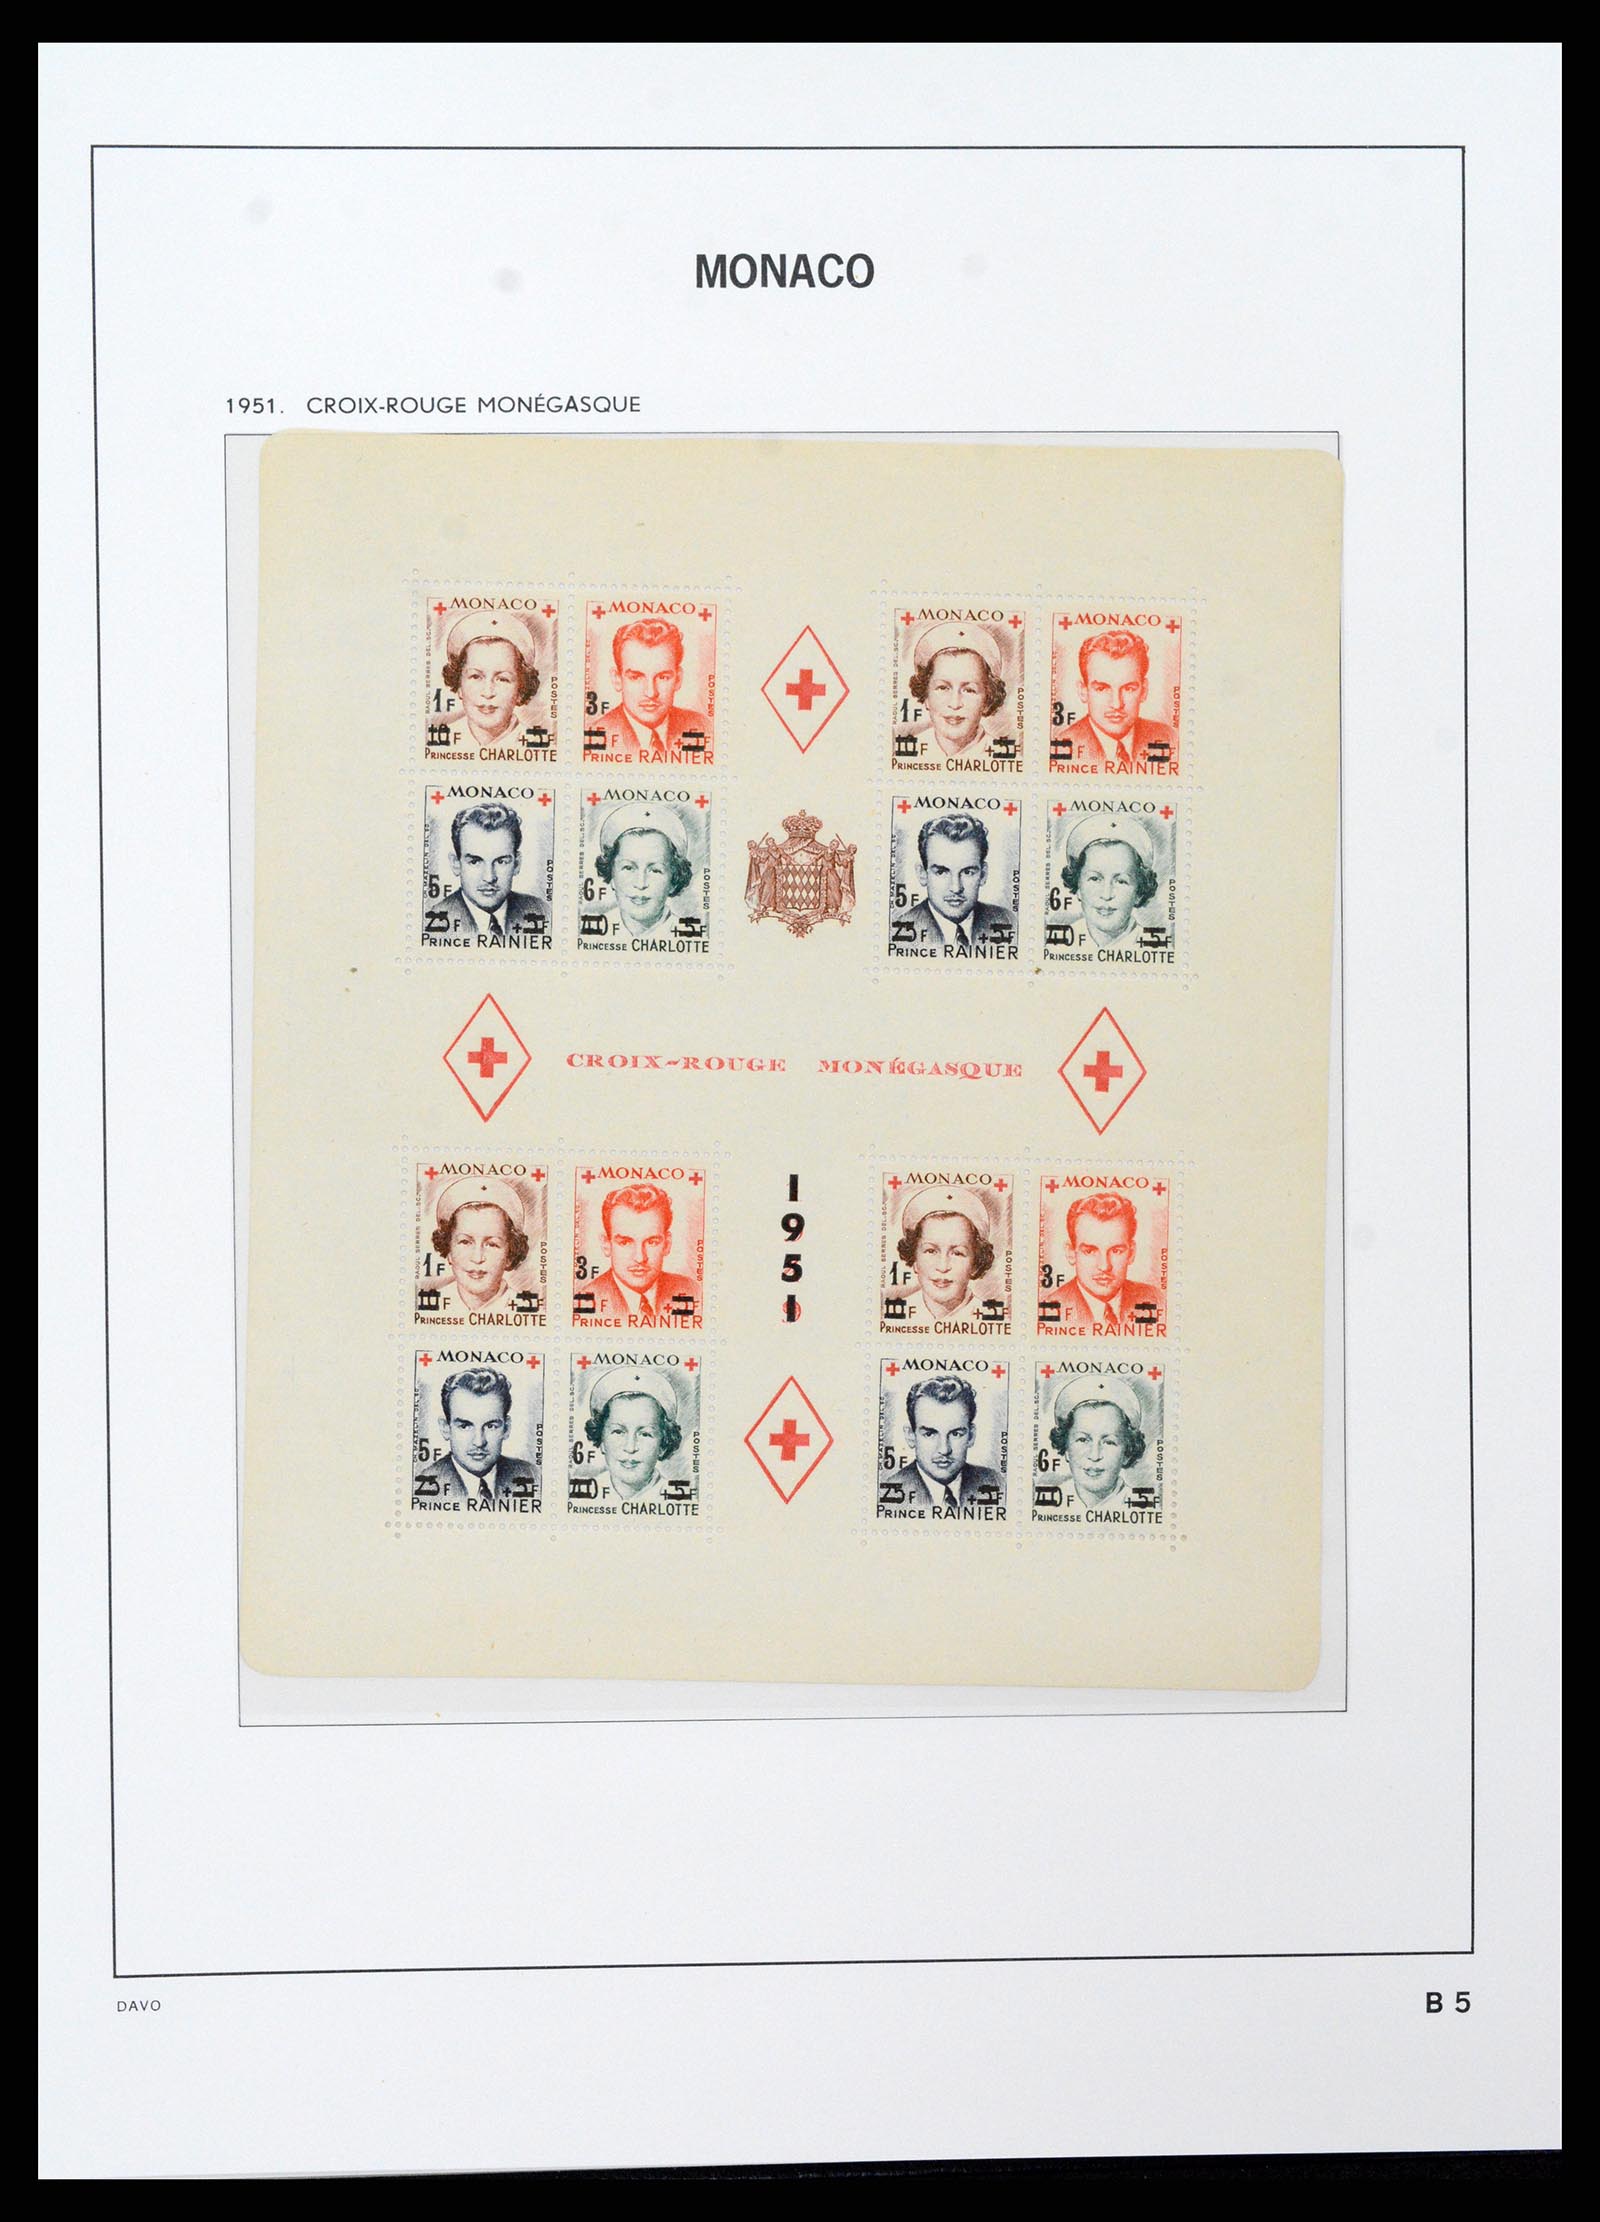 37279 071 - Stamp collection 37279 Monaco 1885-1969.